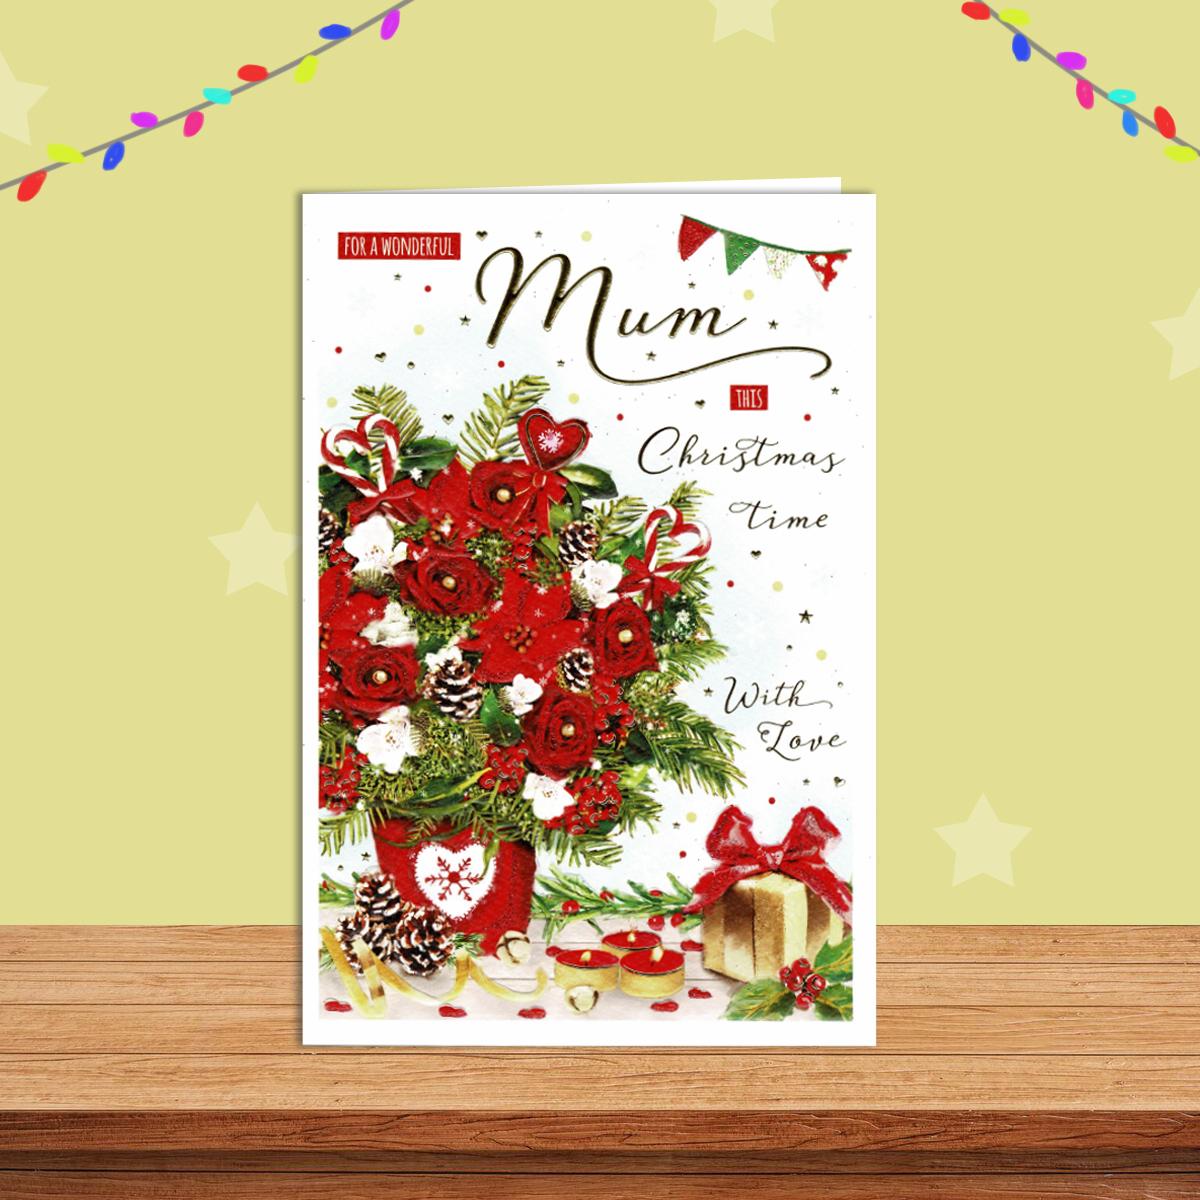 Mum Christmas Card Alongside Its Red Envelope